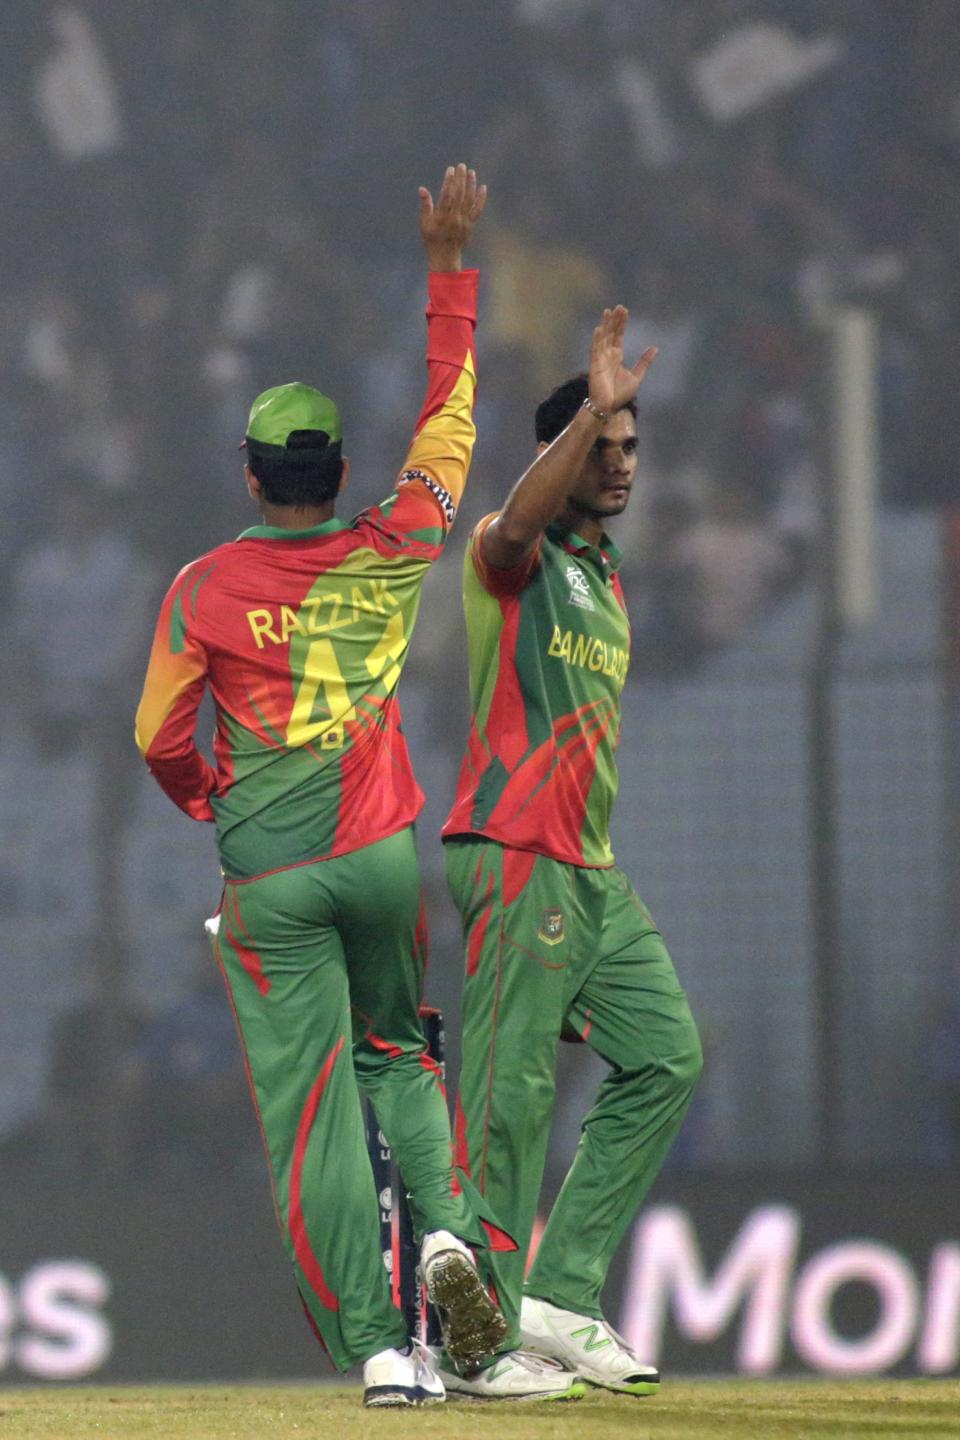 Bangladesh bowler Mashrafe Mortaza, right, celebrates the dismissal of Nepal captain Paras Khadka during their ICC Twenty20 Cricket World Cup match in Chittagong, Bangladesh, Tuesday, March 18, 2014. (AP Photo/Bikas Das)